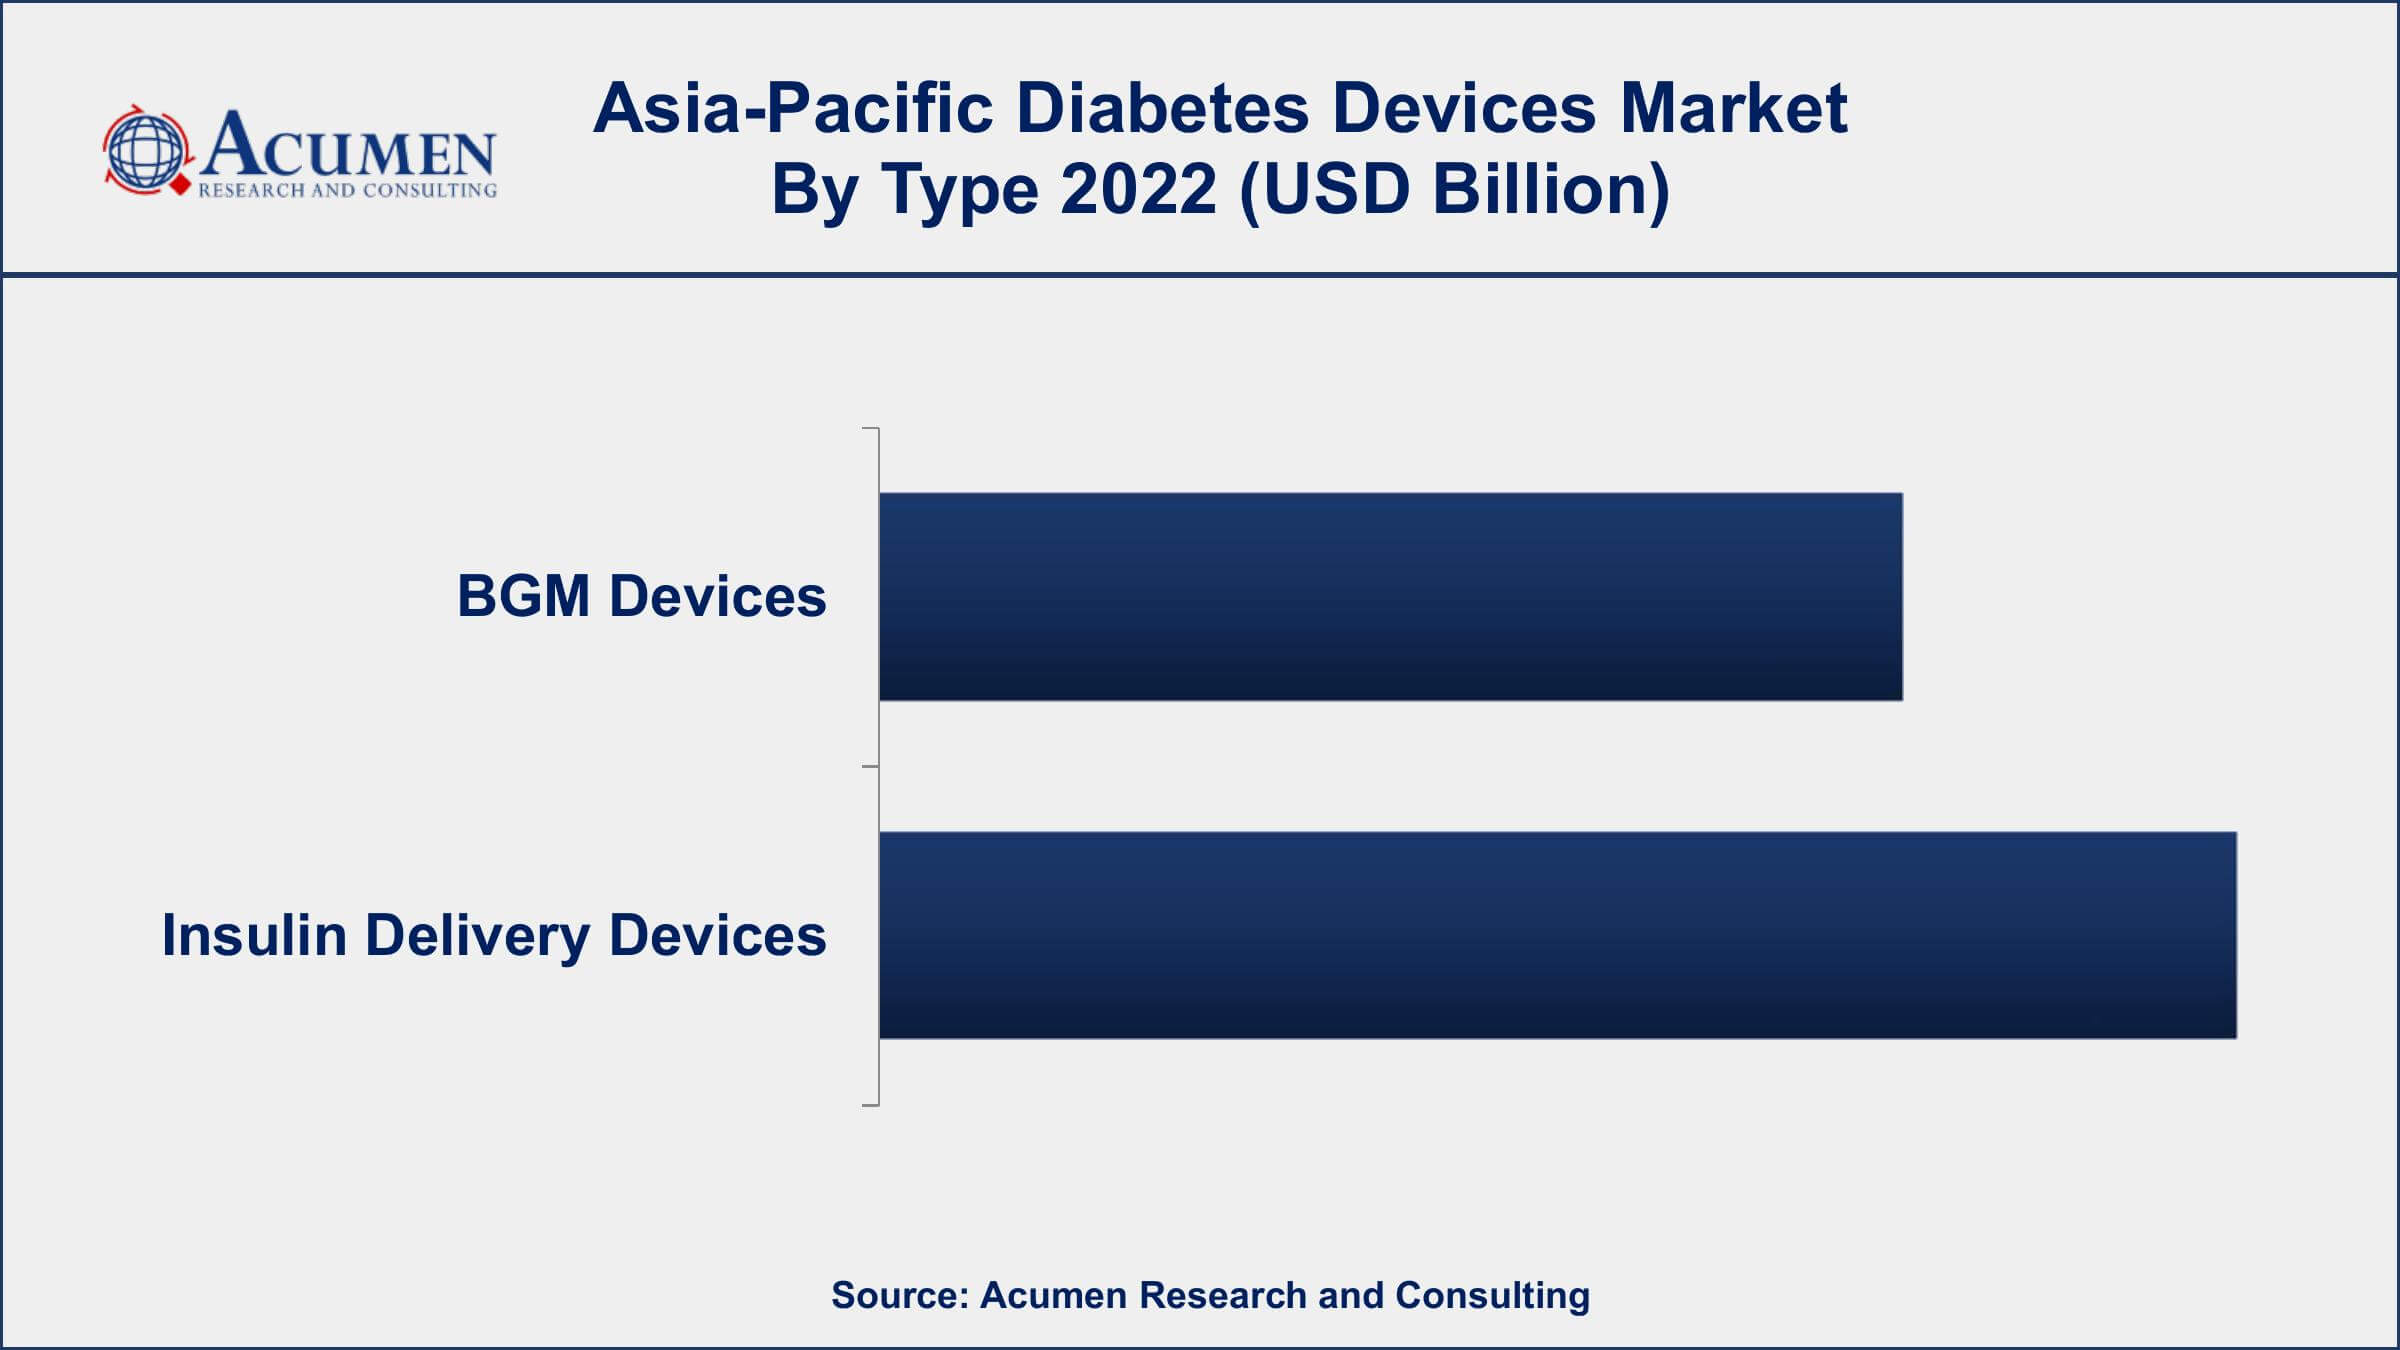 Asia-Pacific Diabetes Devices Market Drivers